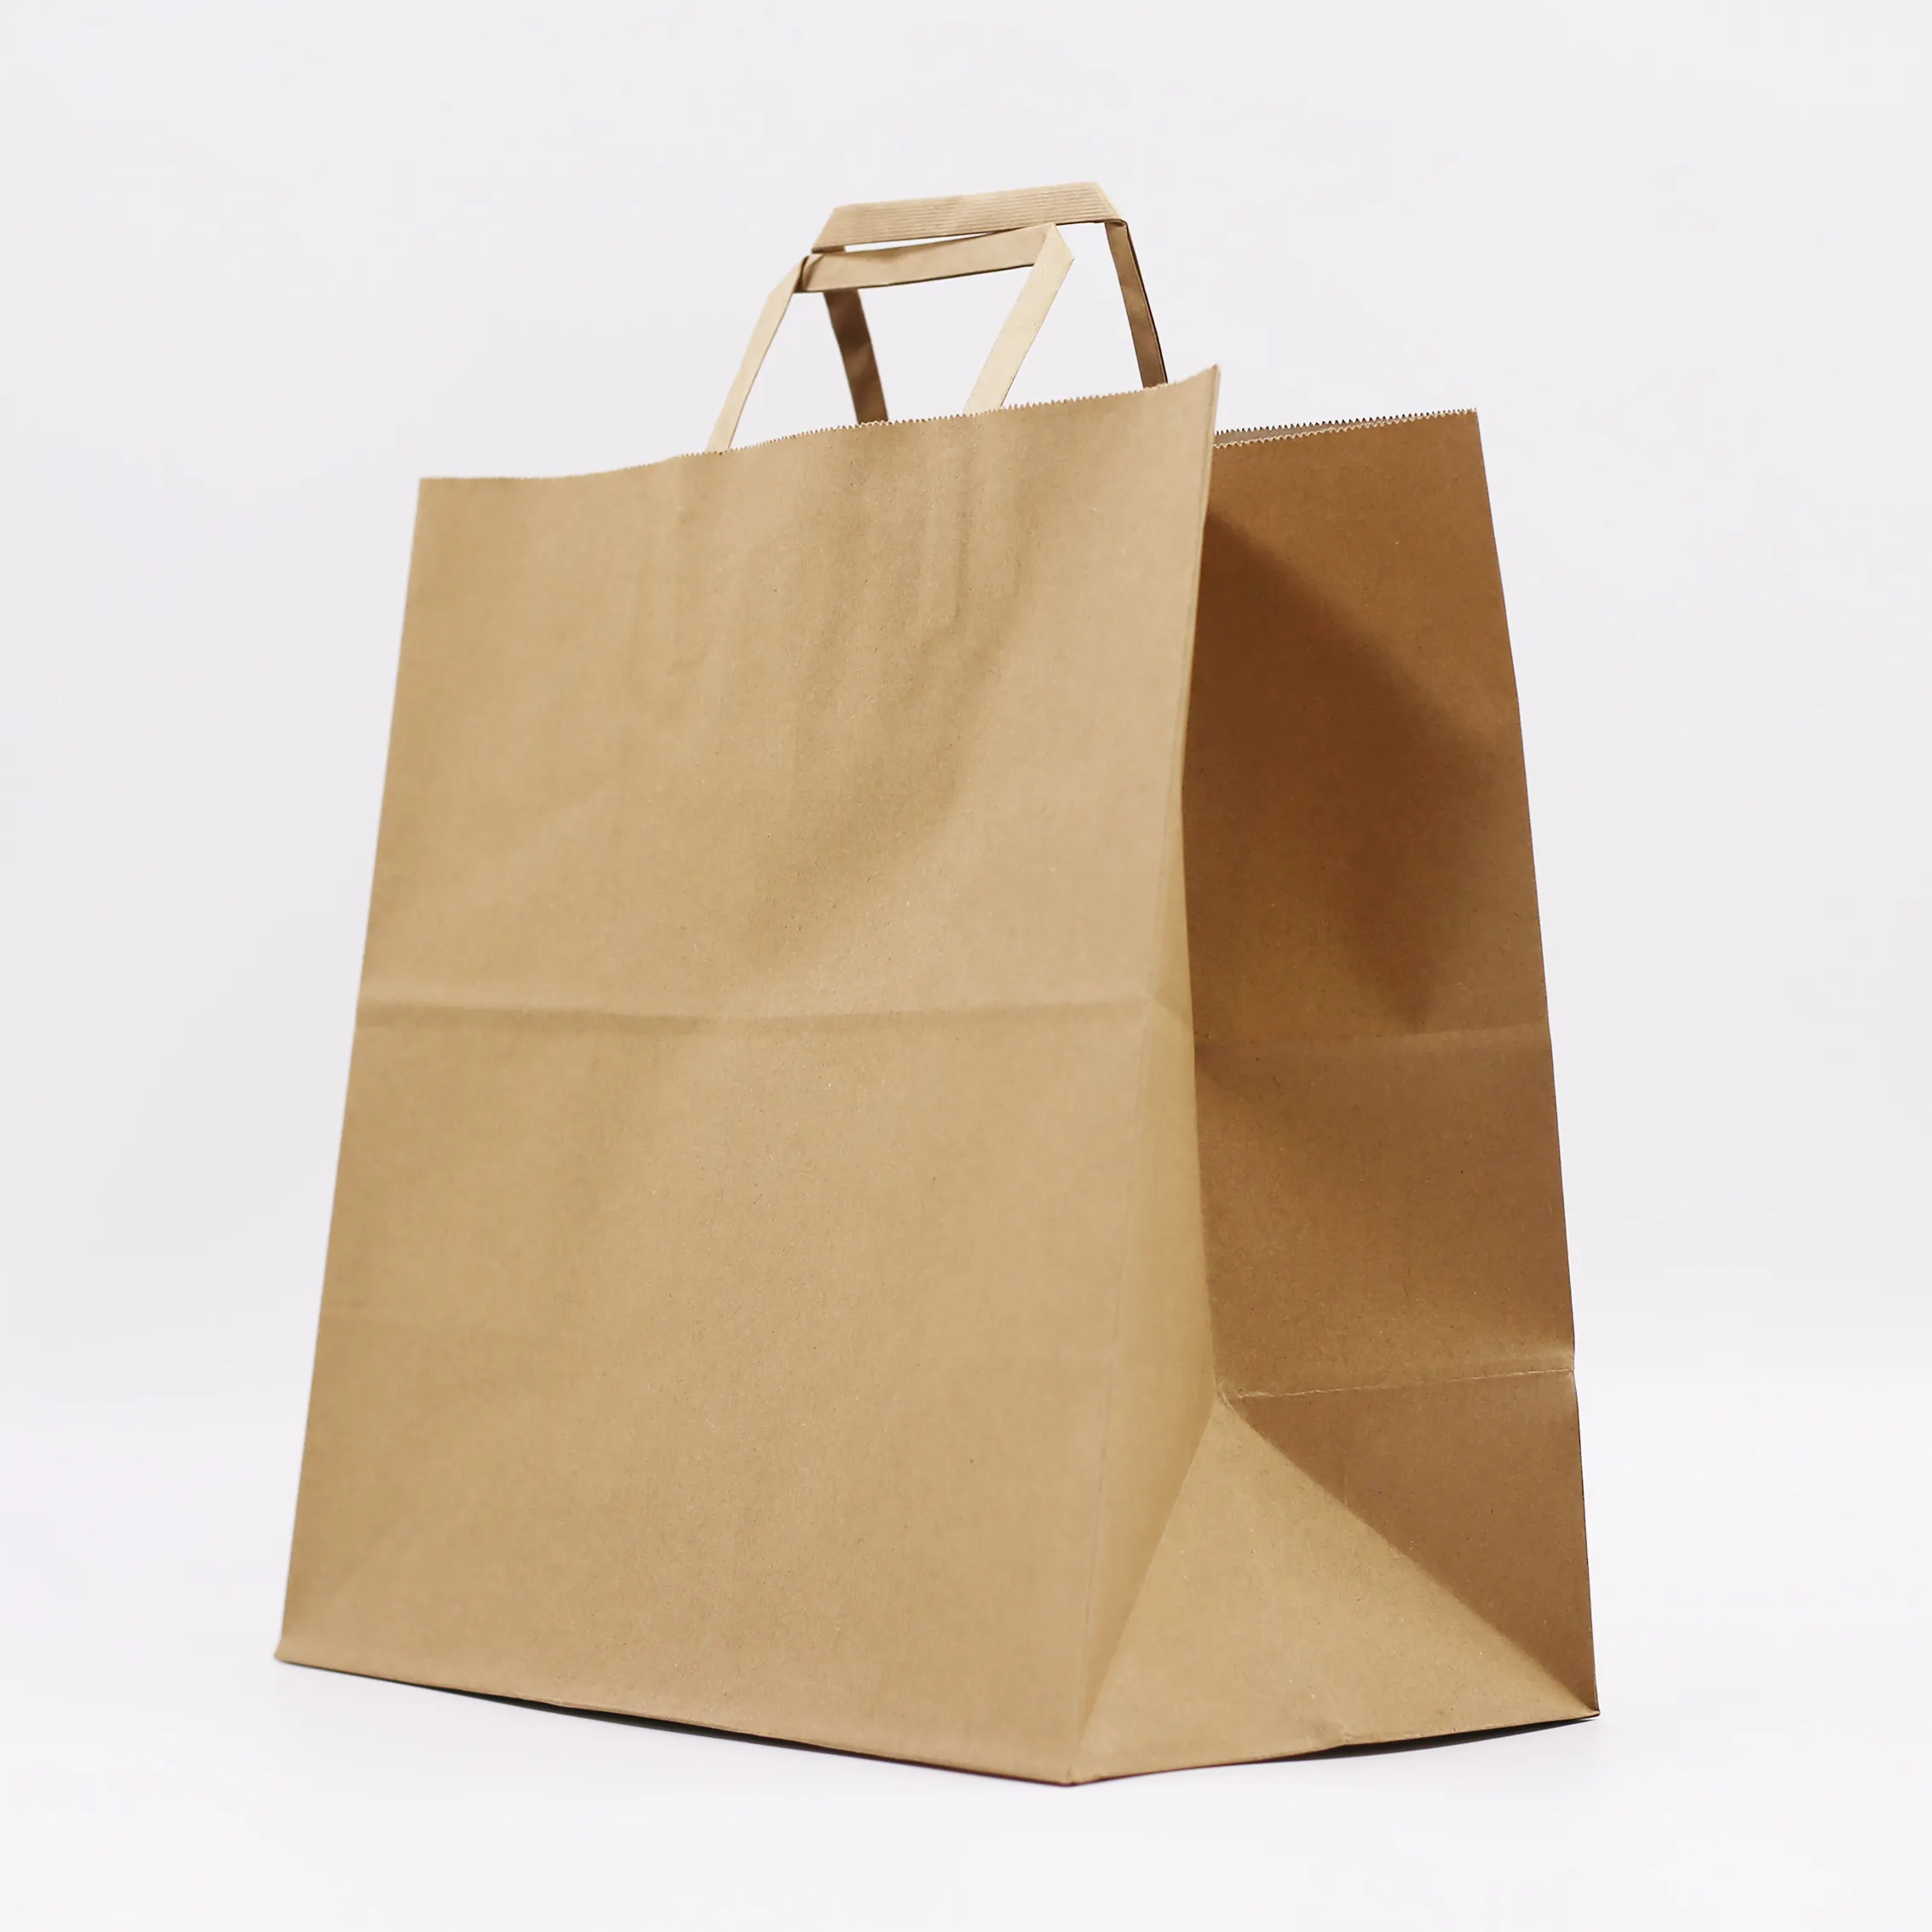 Wholesale Custom Printed Flat Handle Paper Carrier Bags Grocery Bag 12 x 7 x 14" 1/7 Barrel recycle paper bags